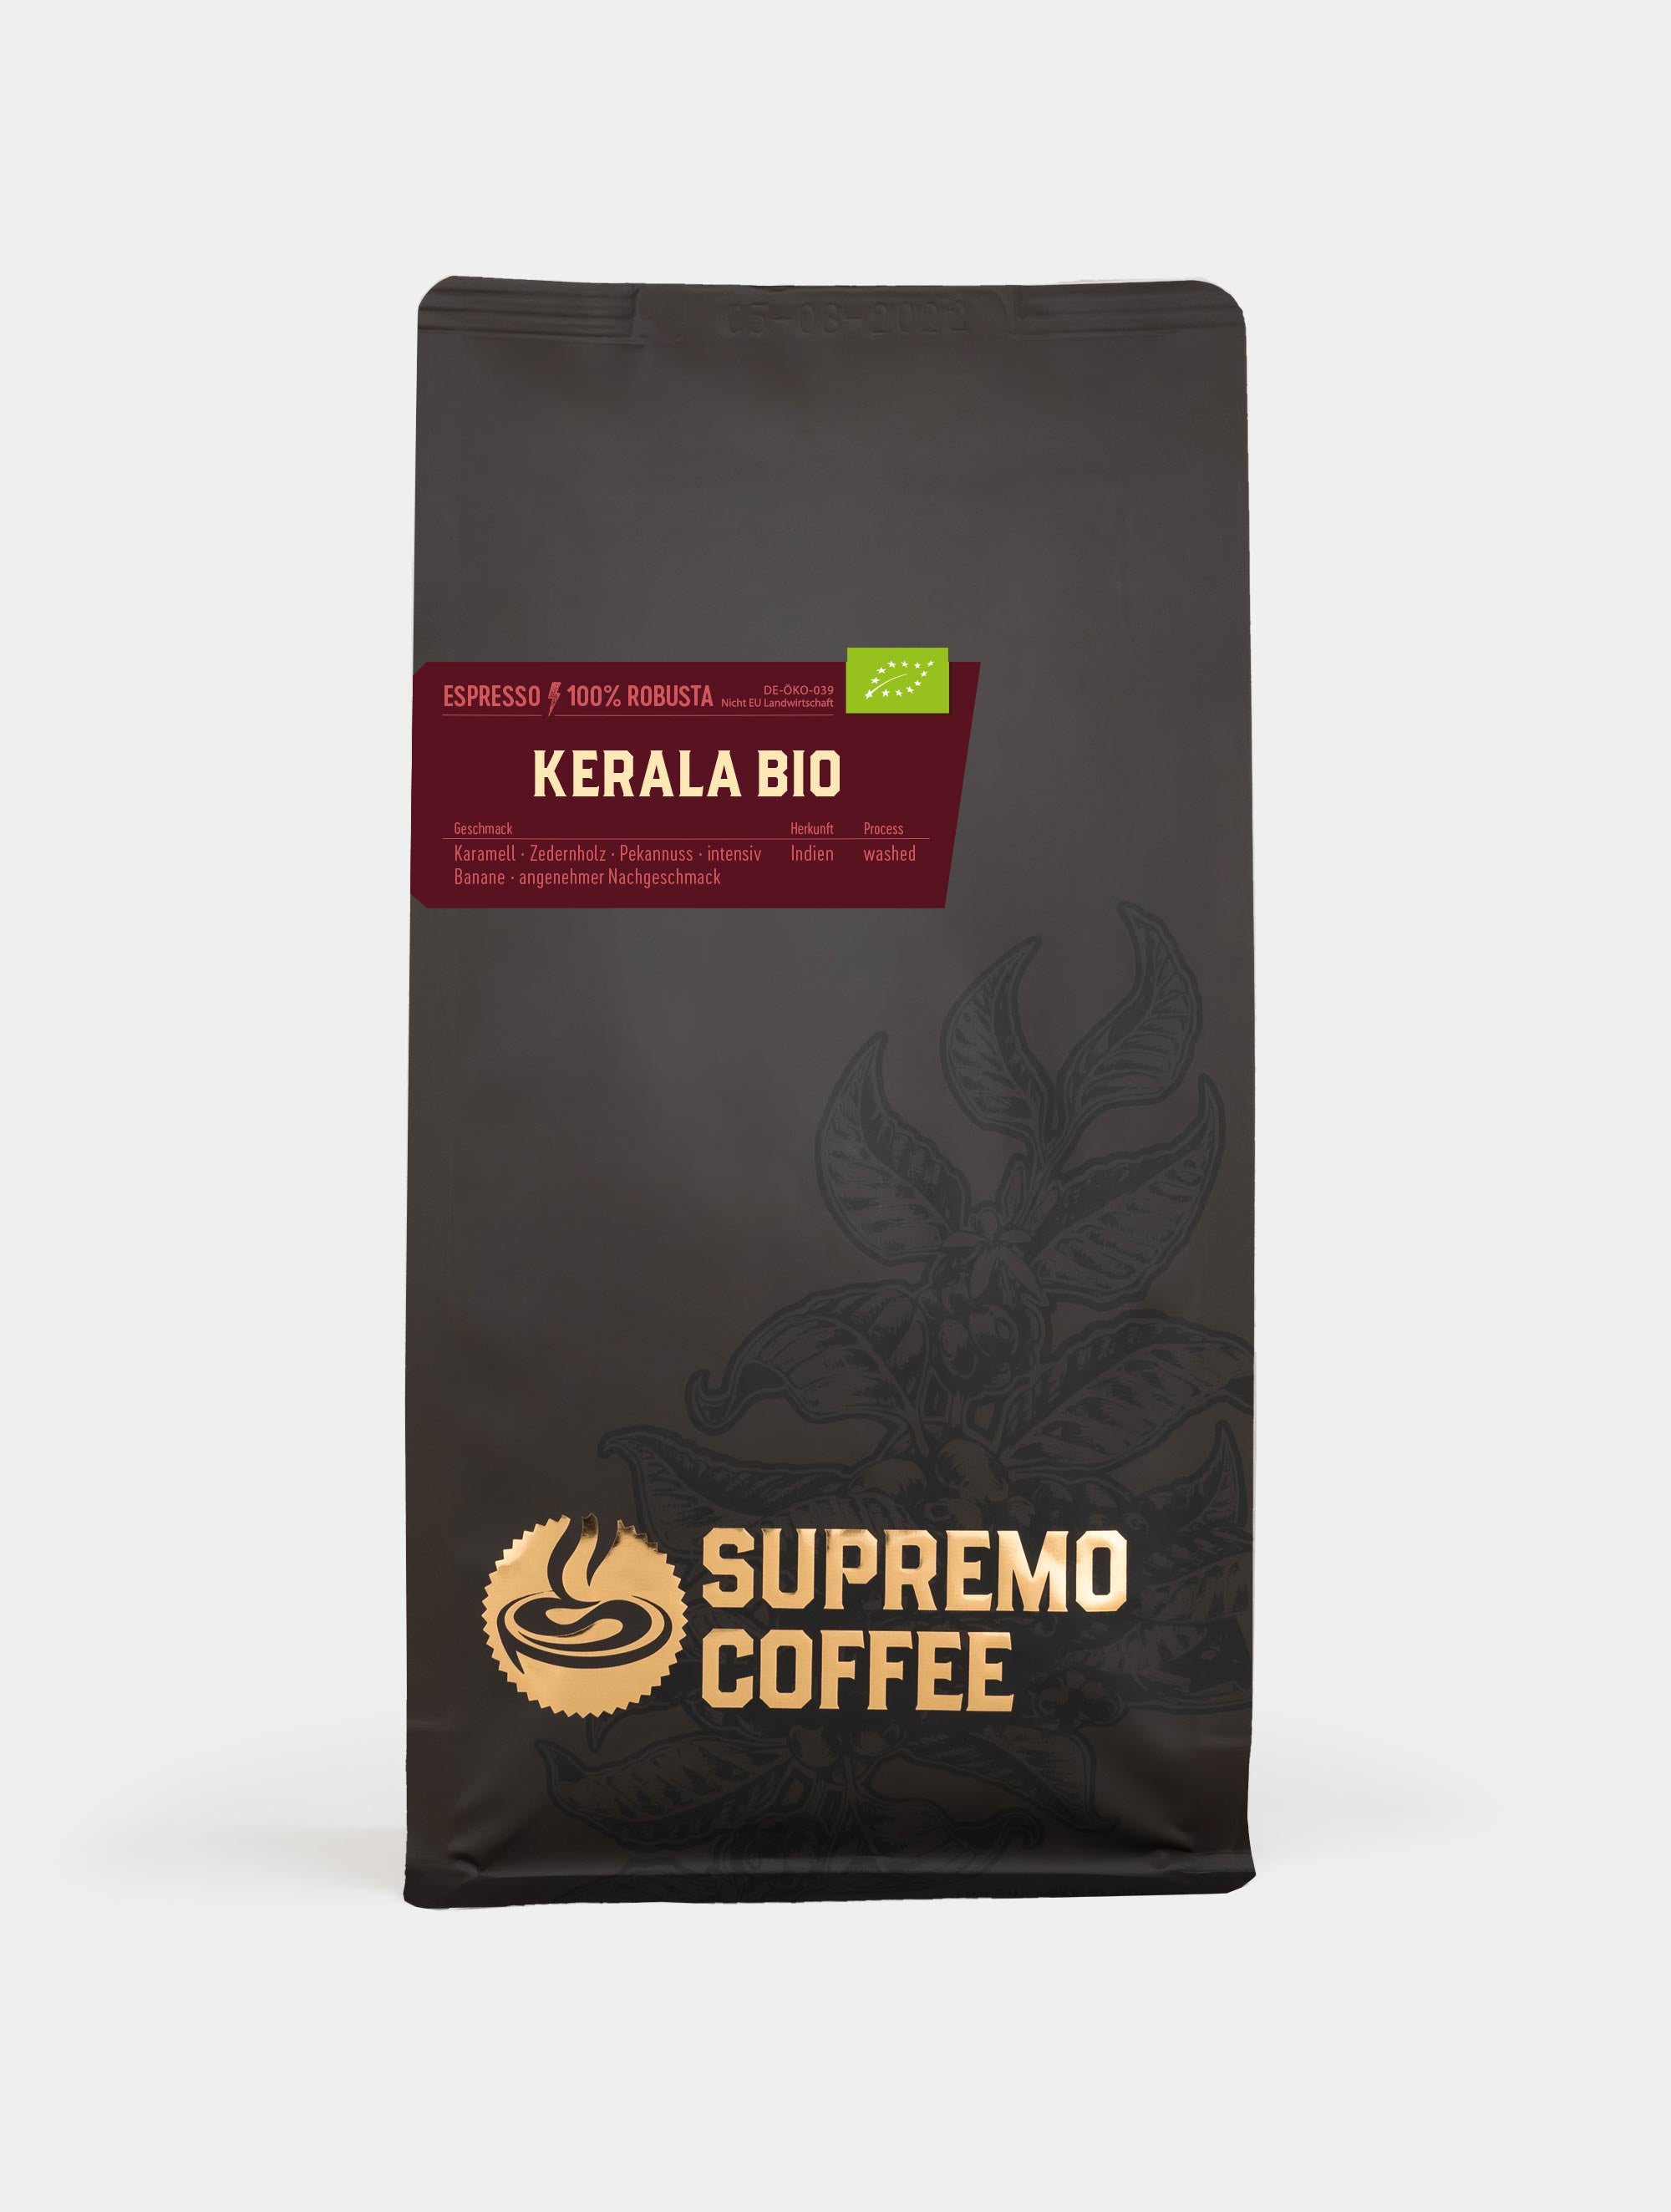 Kerala Bio, Indien | SUPREMO Coffee